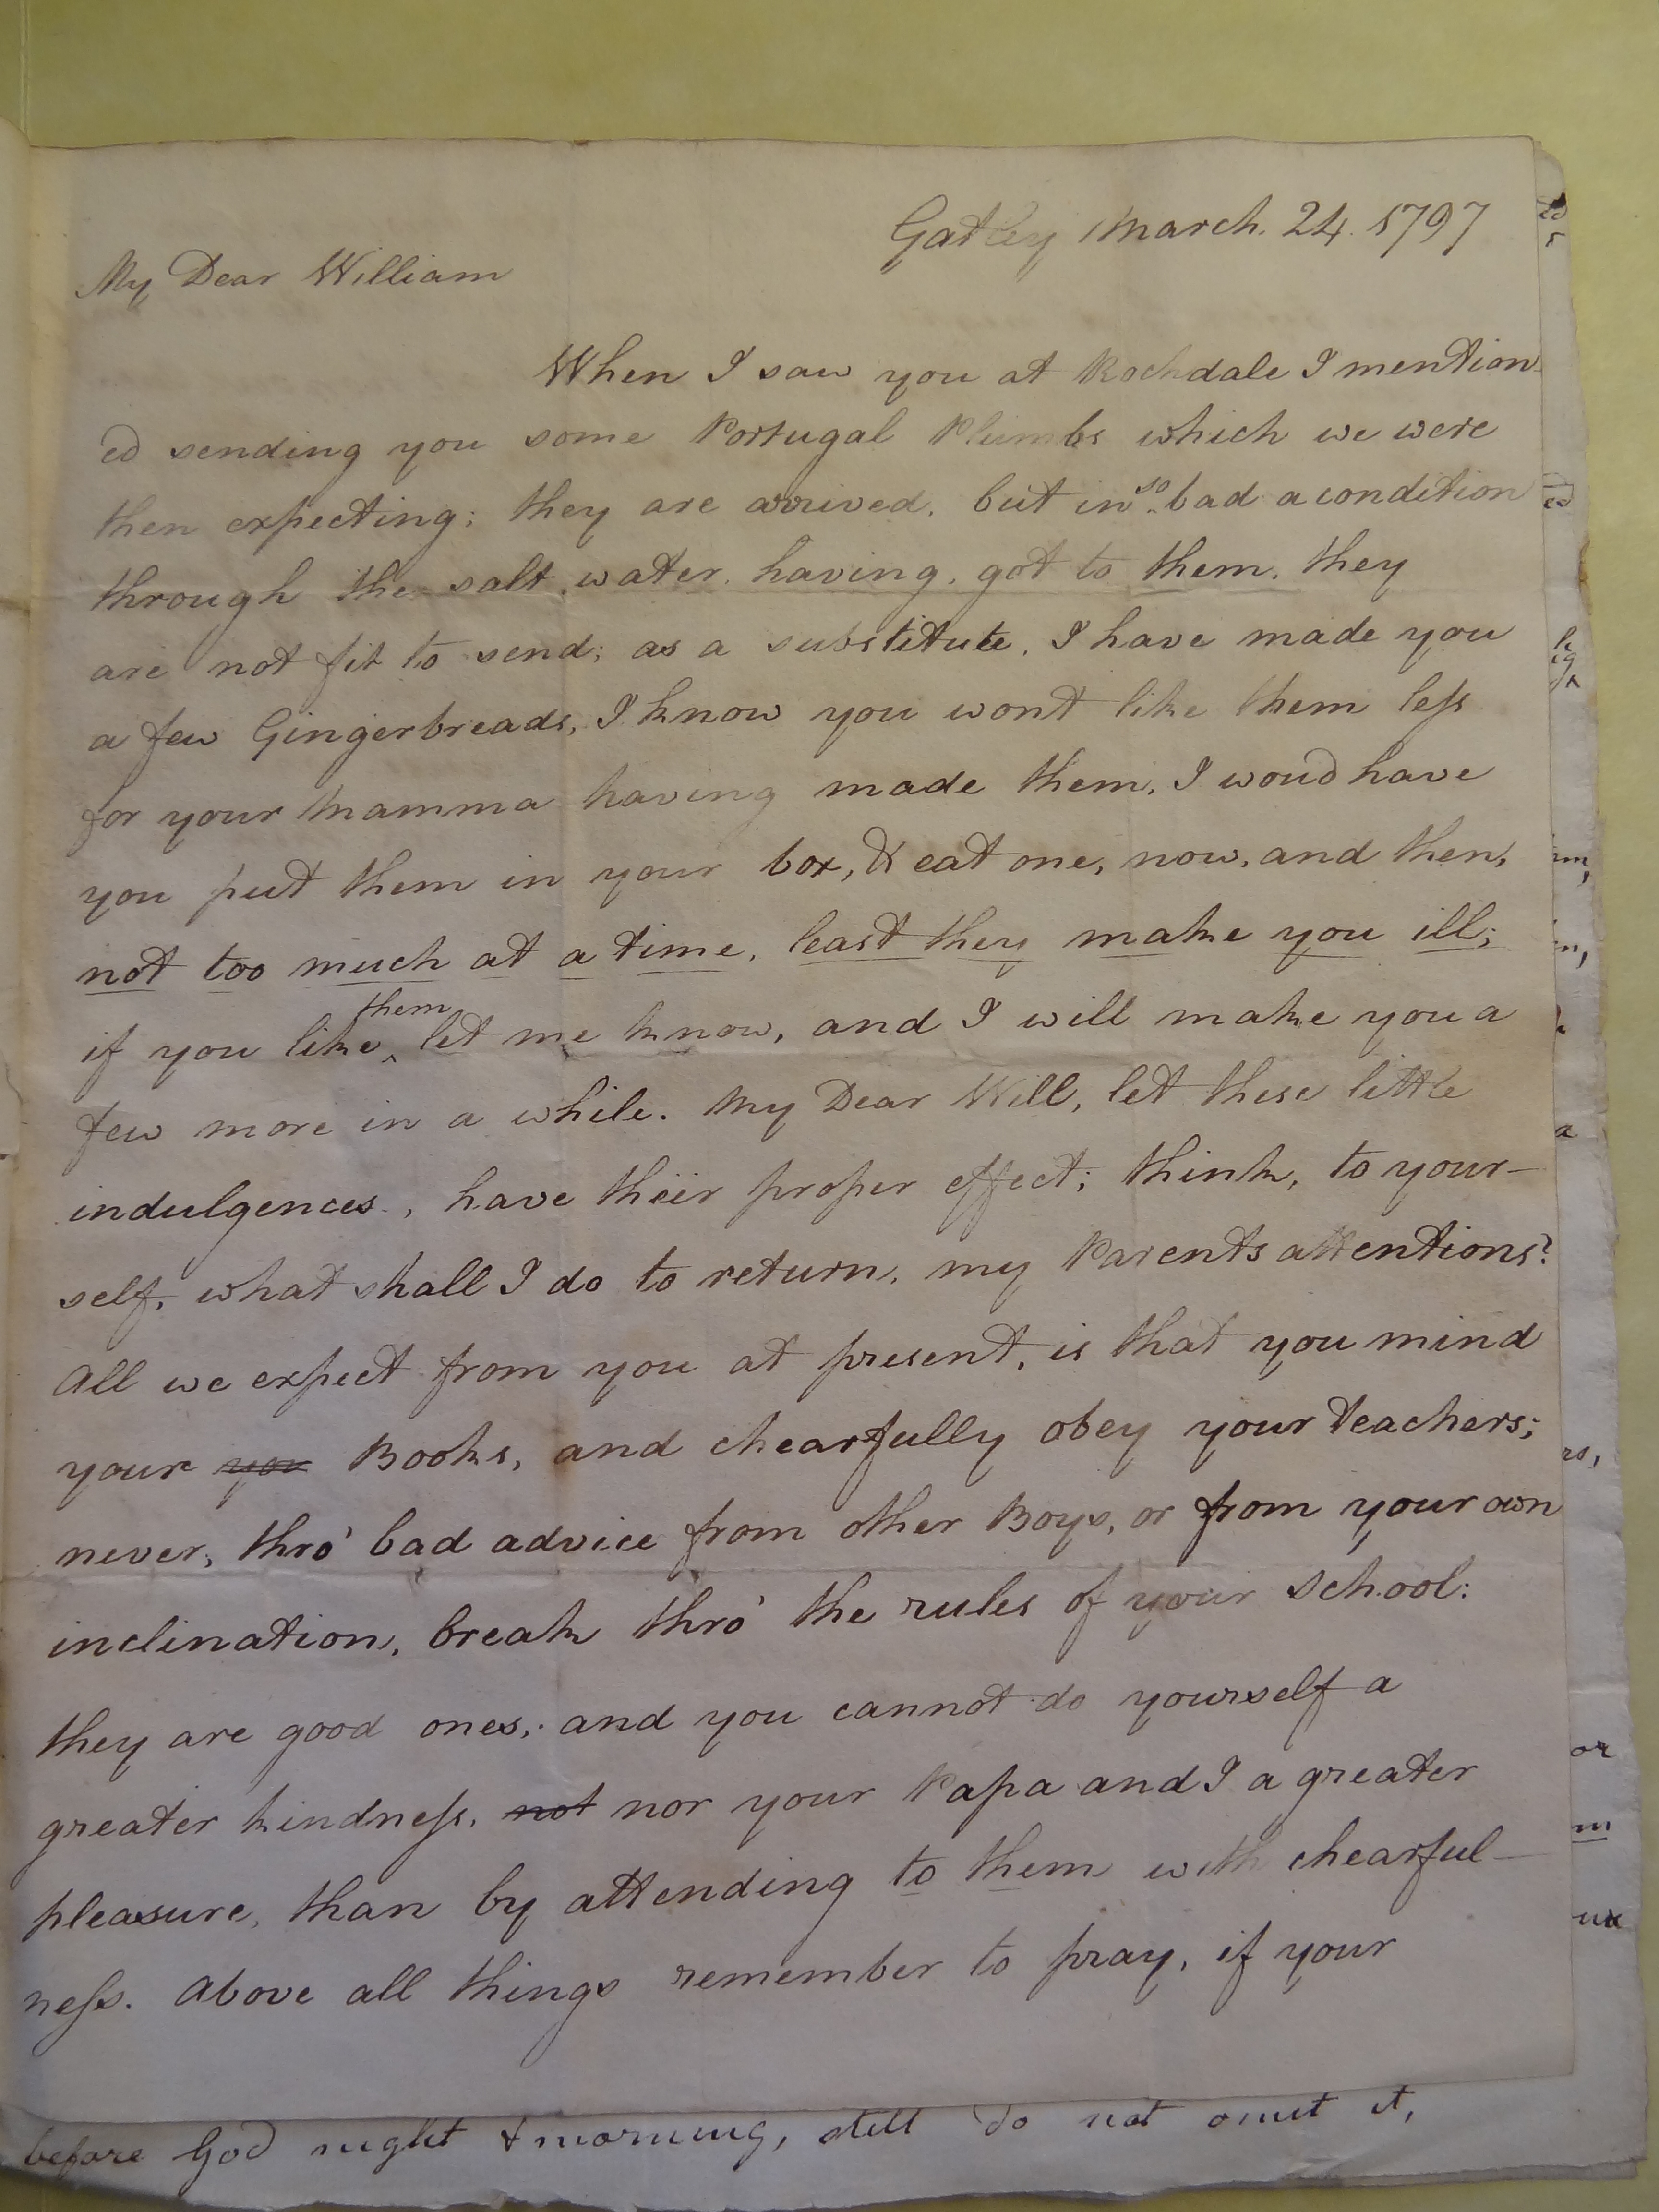 Image #1 of letter: Rebecca Bateman to William Bateman, 24 March 1797